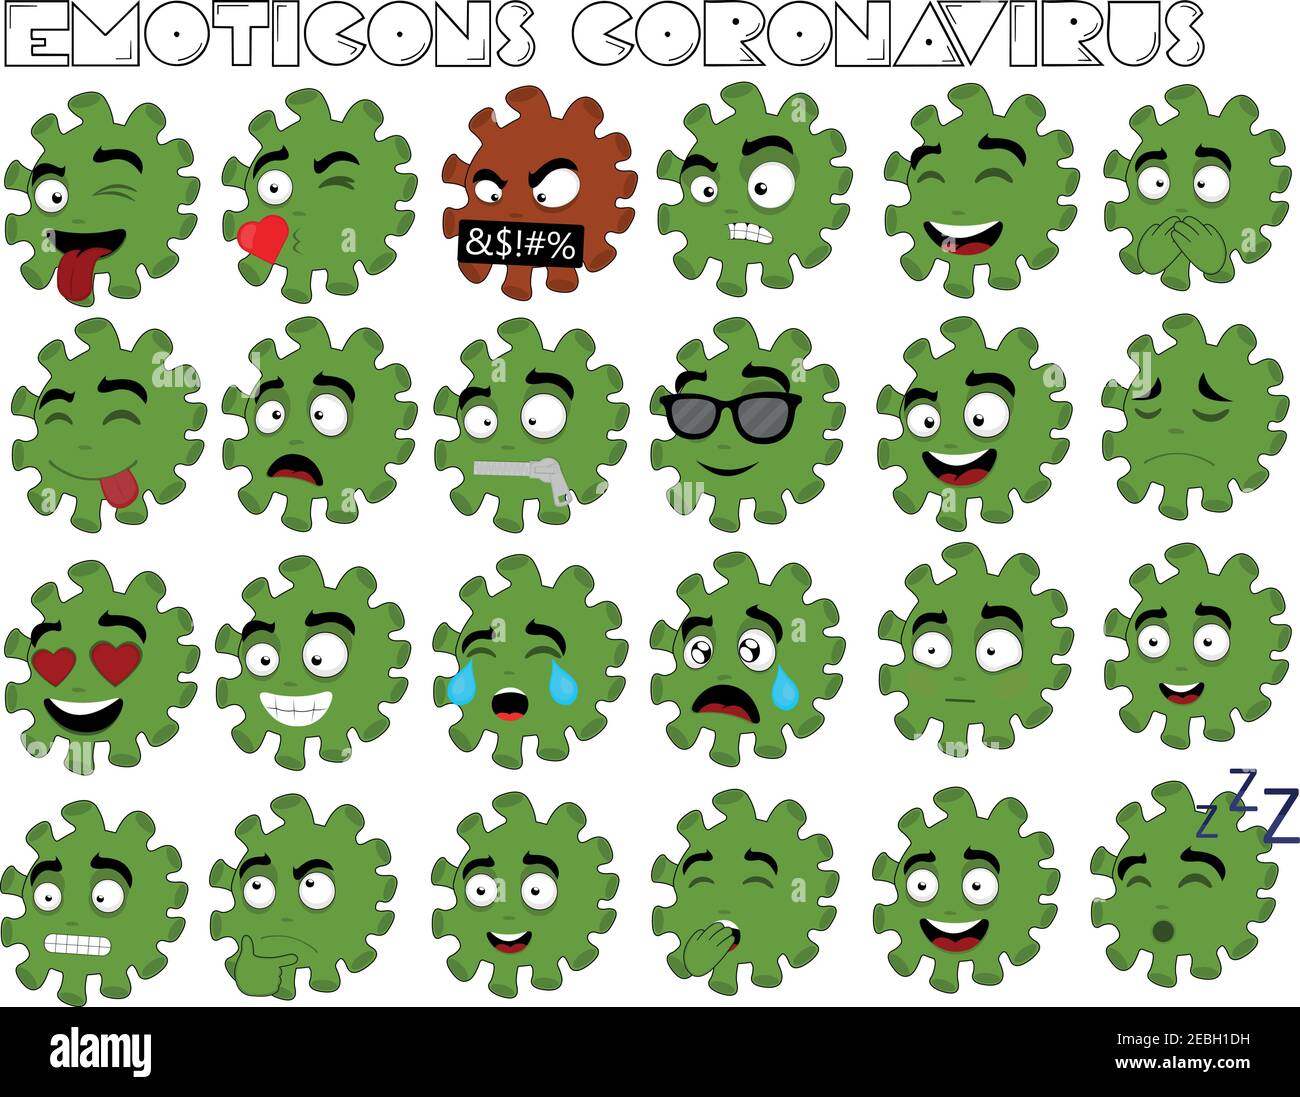 Vector illustration of cartoon coronavirus expressions Stock Vector